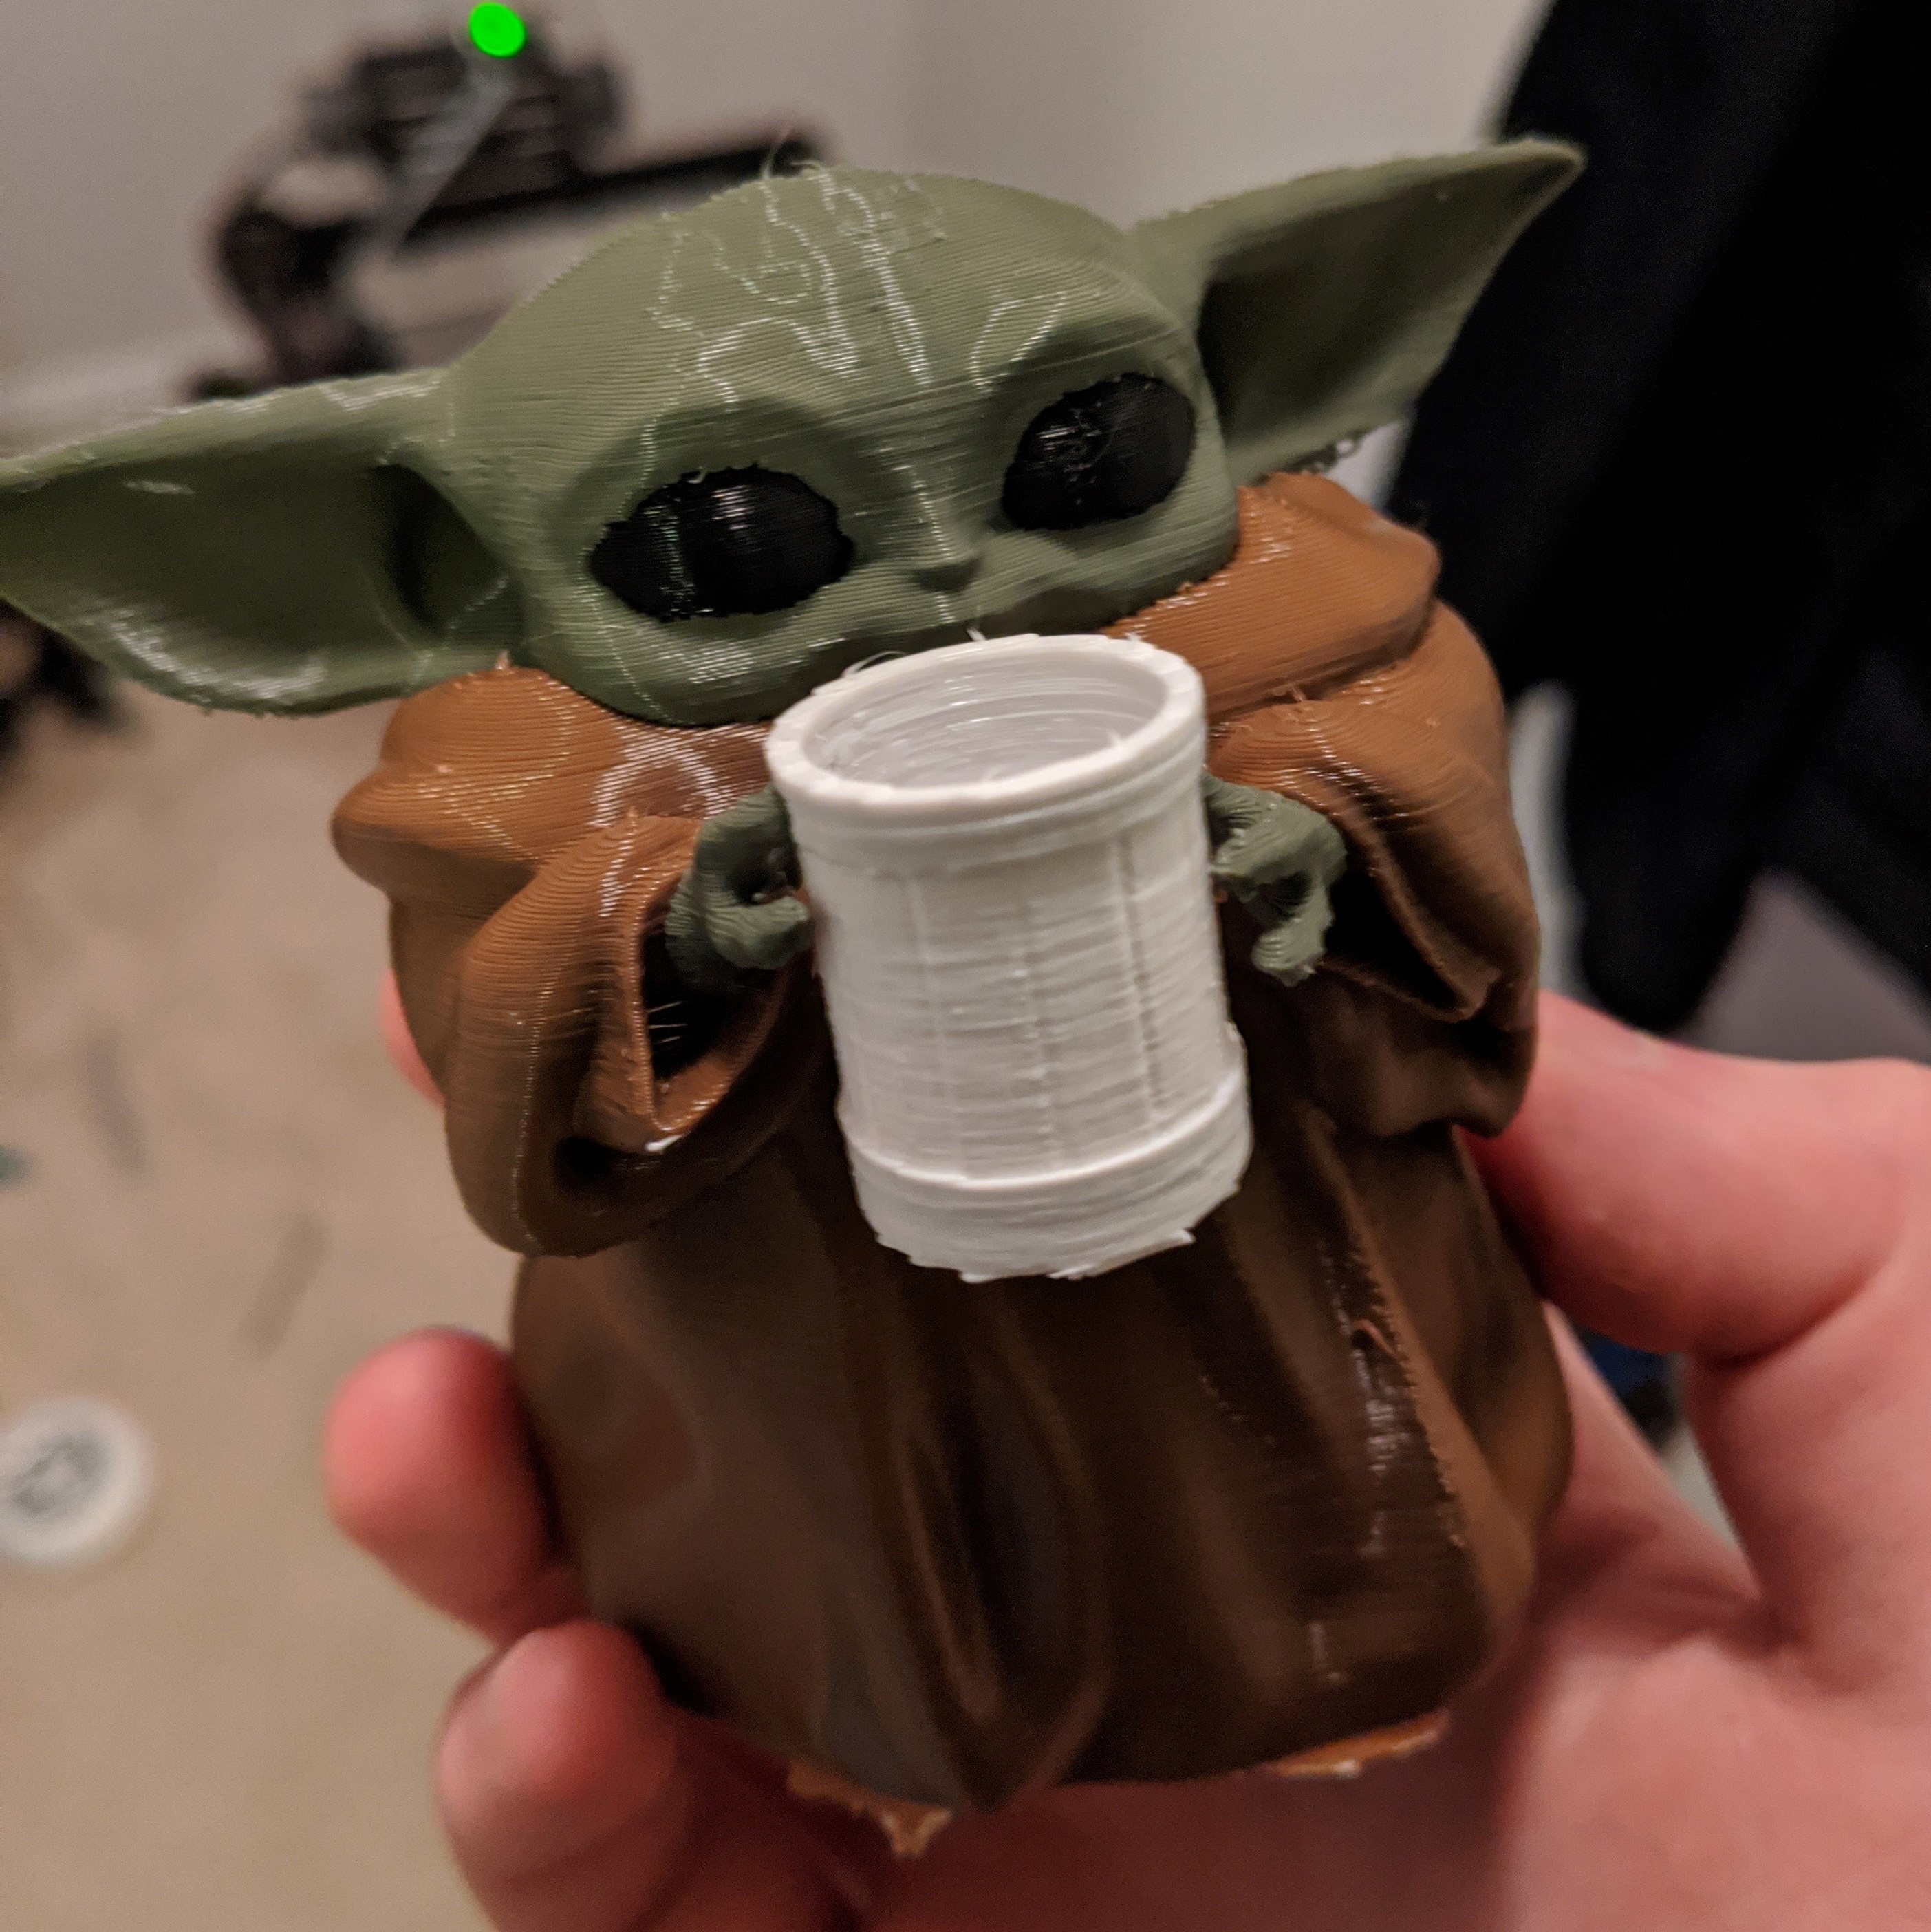 Baby Yoda Holding Beer Mug MMU